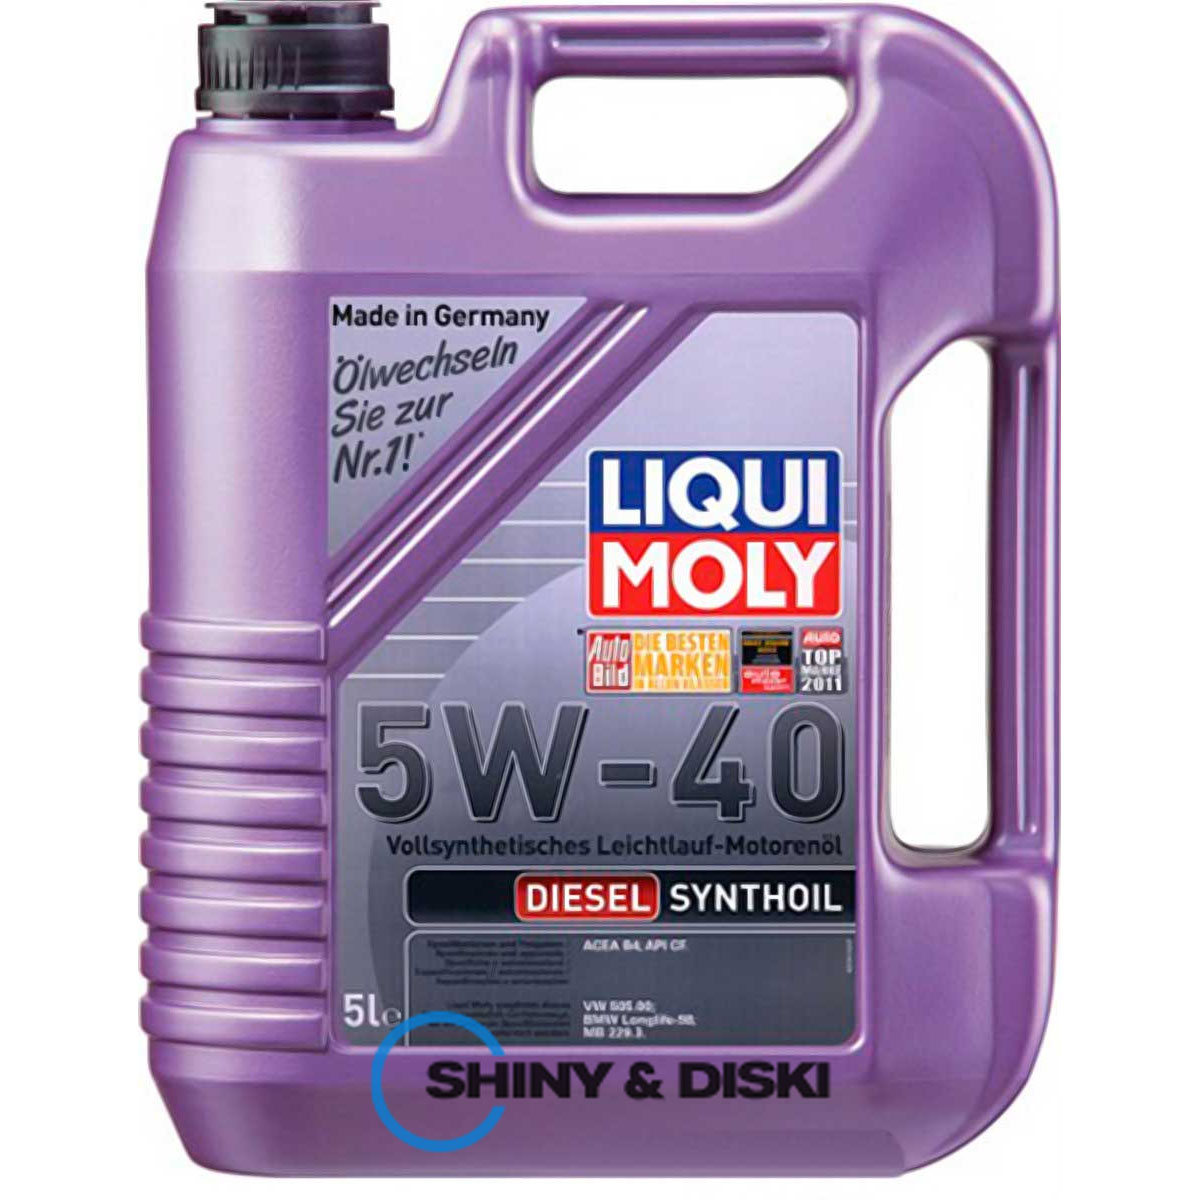 liqui moly diesel synthoil 5w-40 (5л)